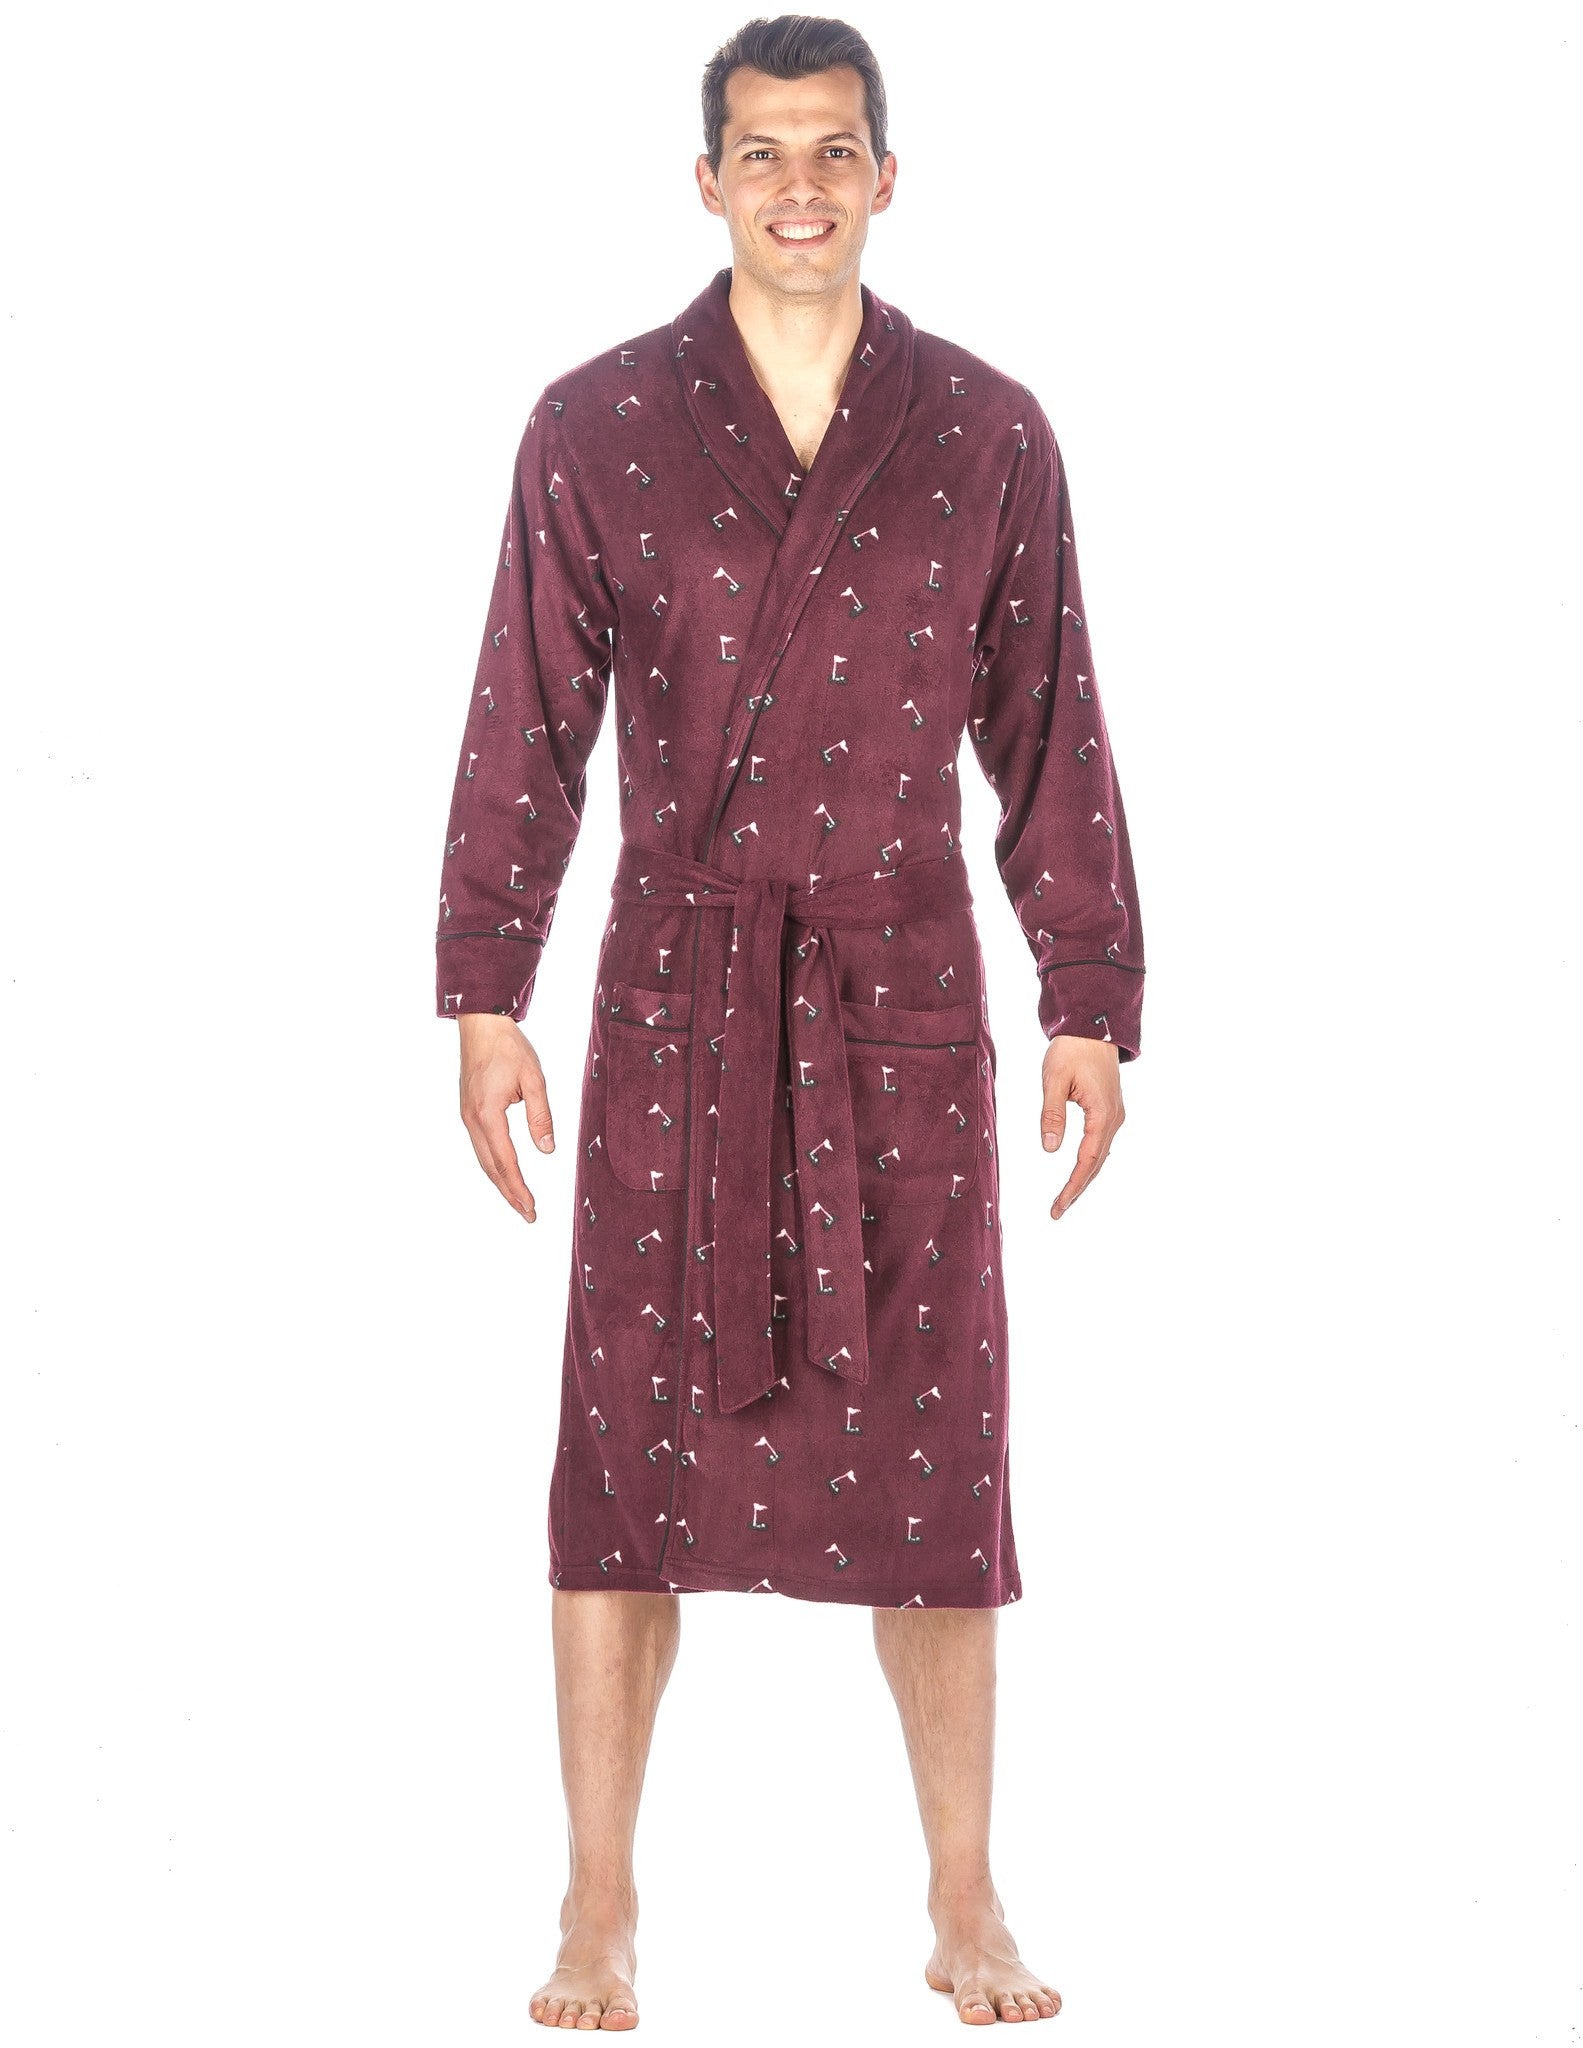 Men's Microfleece Robe